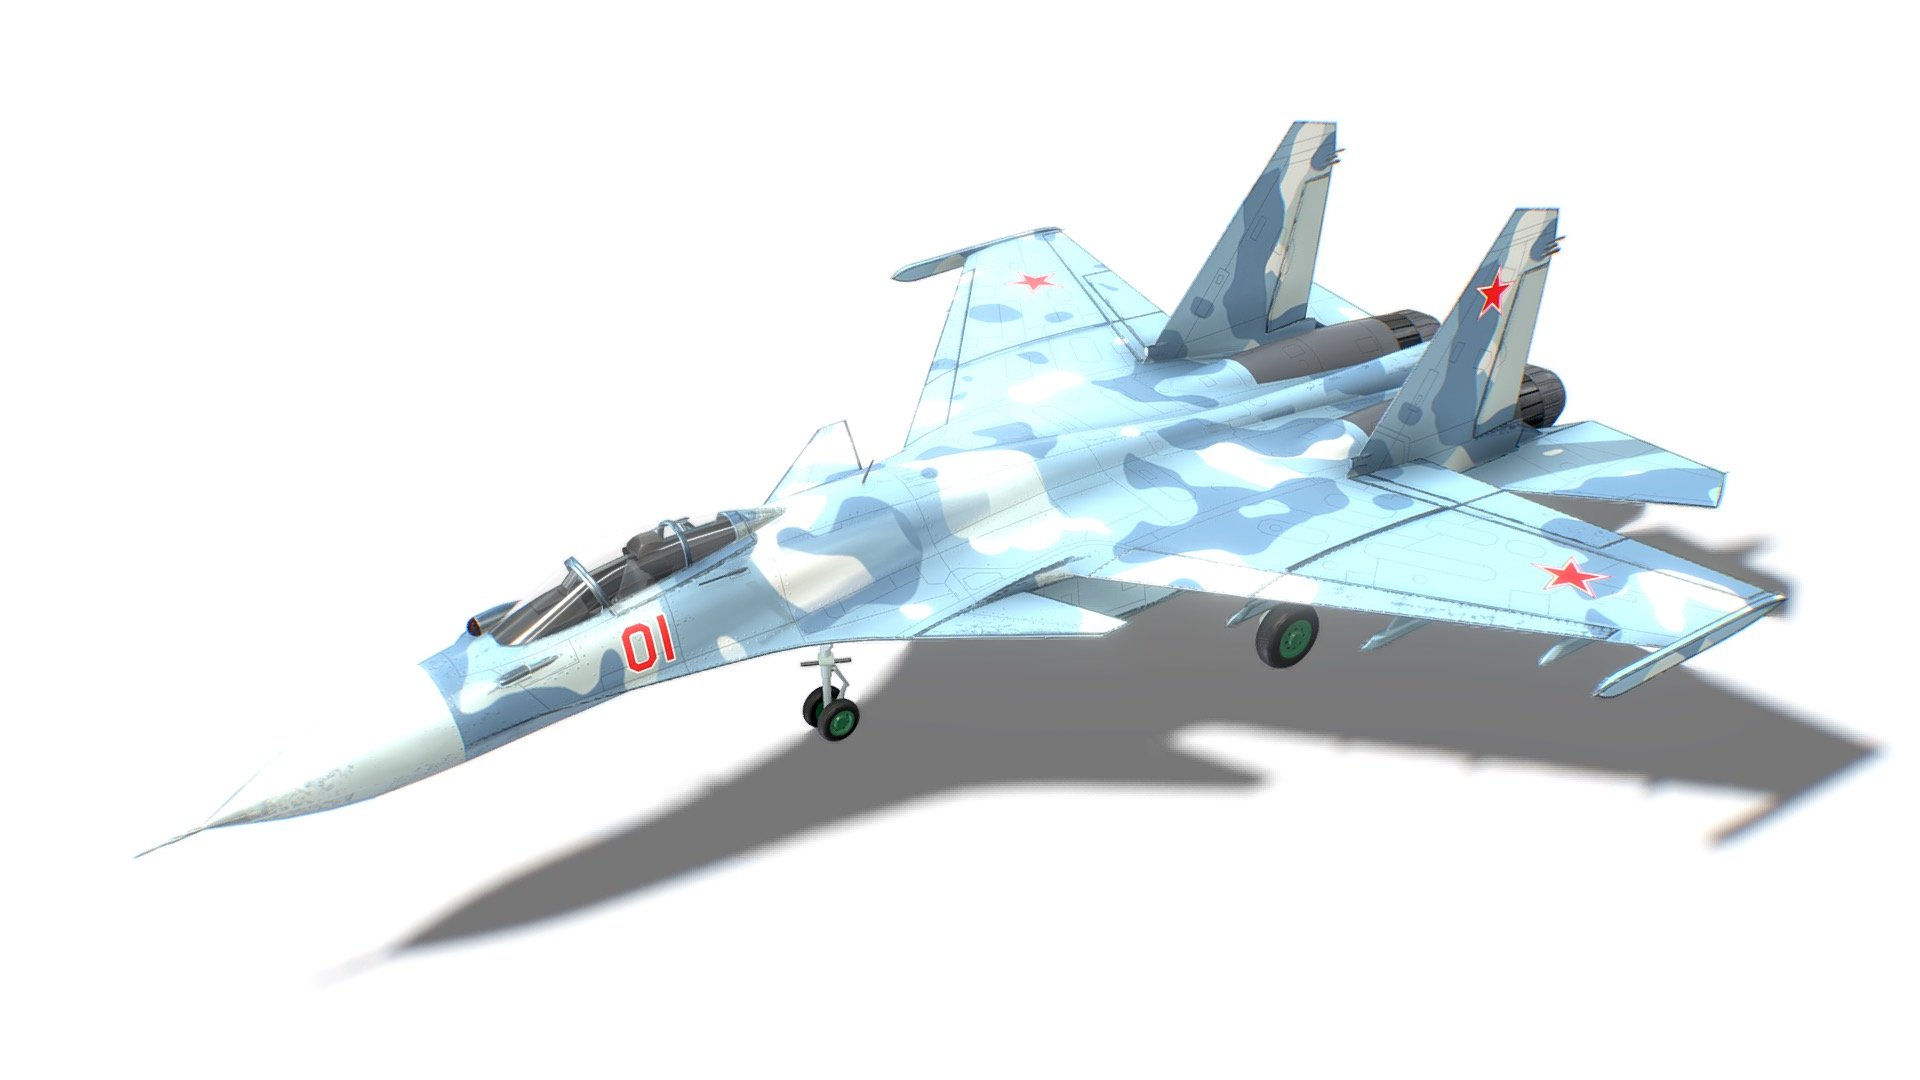 SU-33 Flanker-D Jet Fighter Aircraft